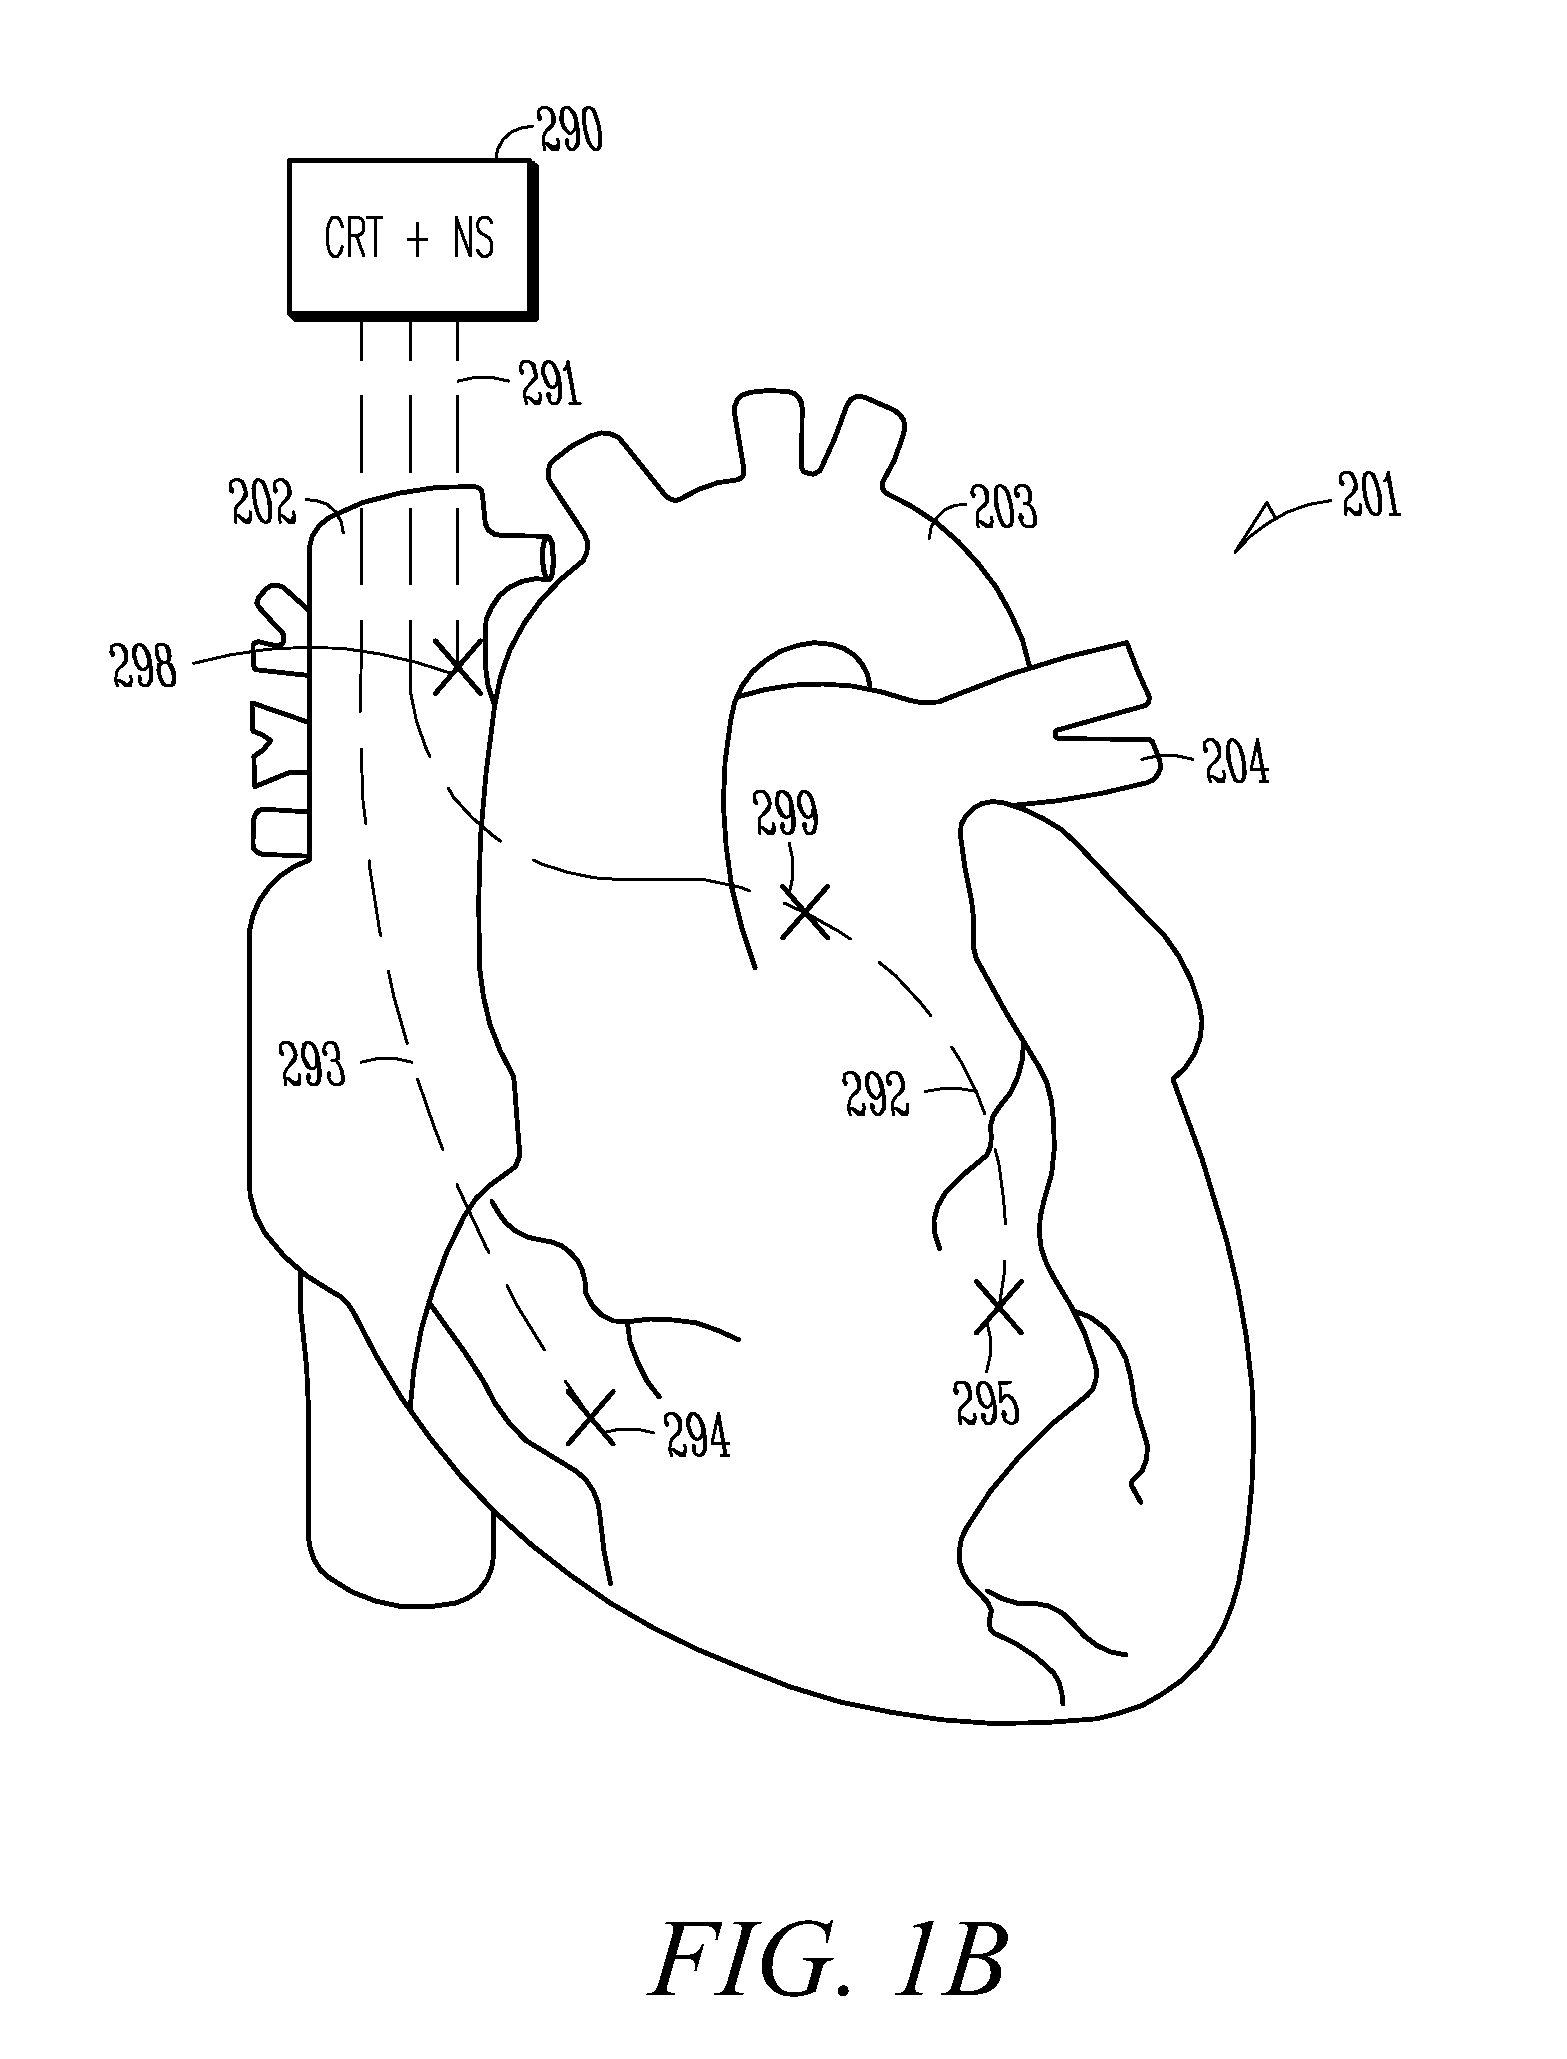 Transvascular neural stimulation device